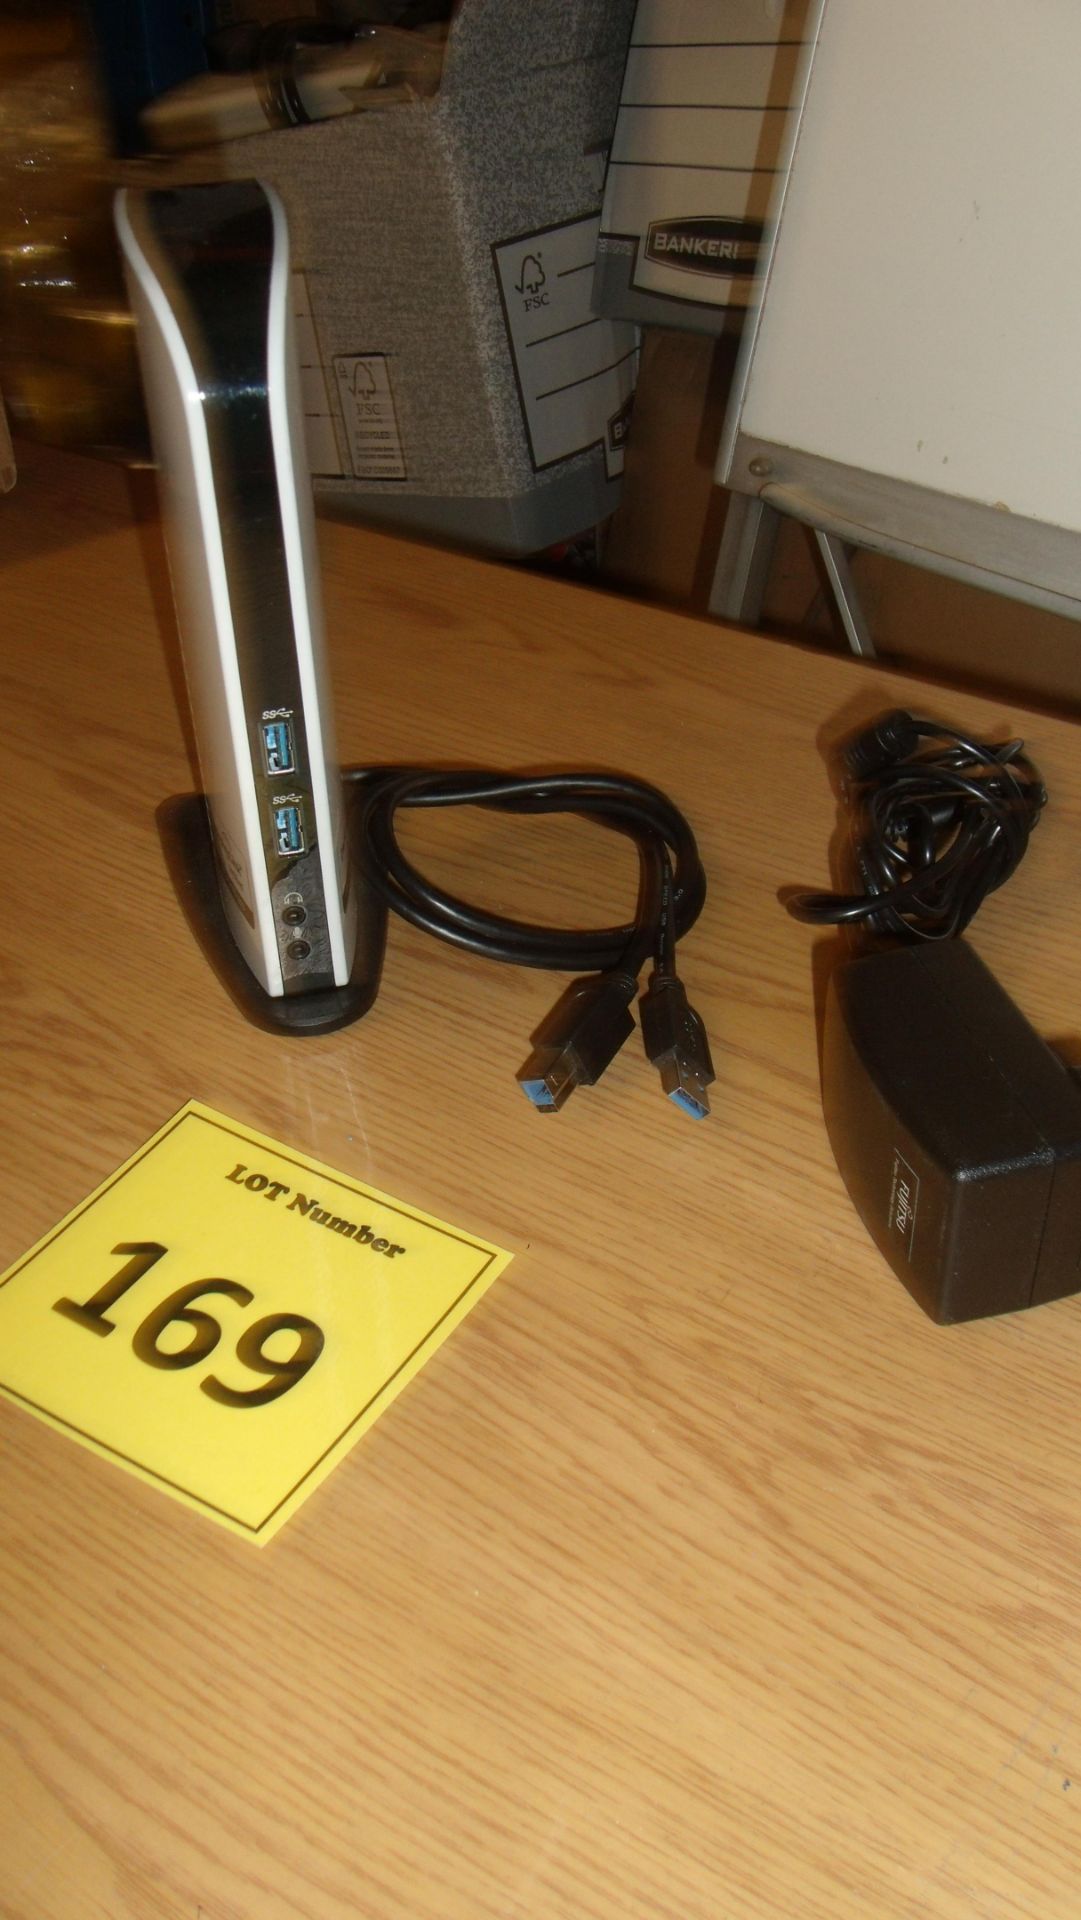 FUJITSU USB 3 PORT REPLICATOR PR08 WITH PSU & USB 3 CABLE - Image 2 of 3